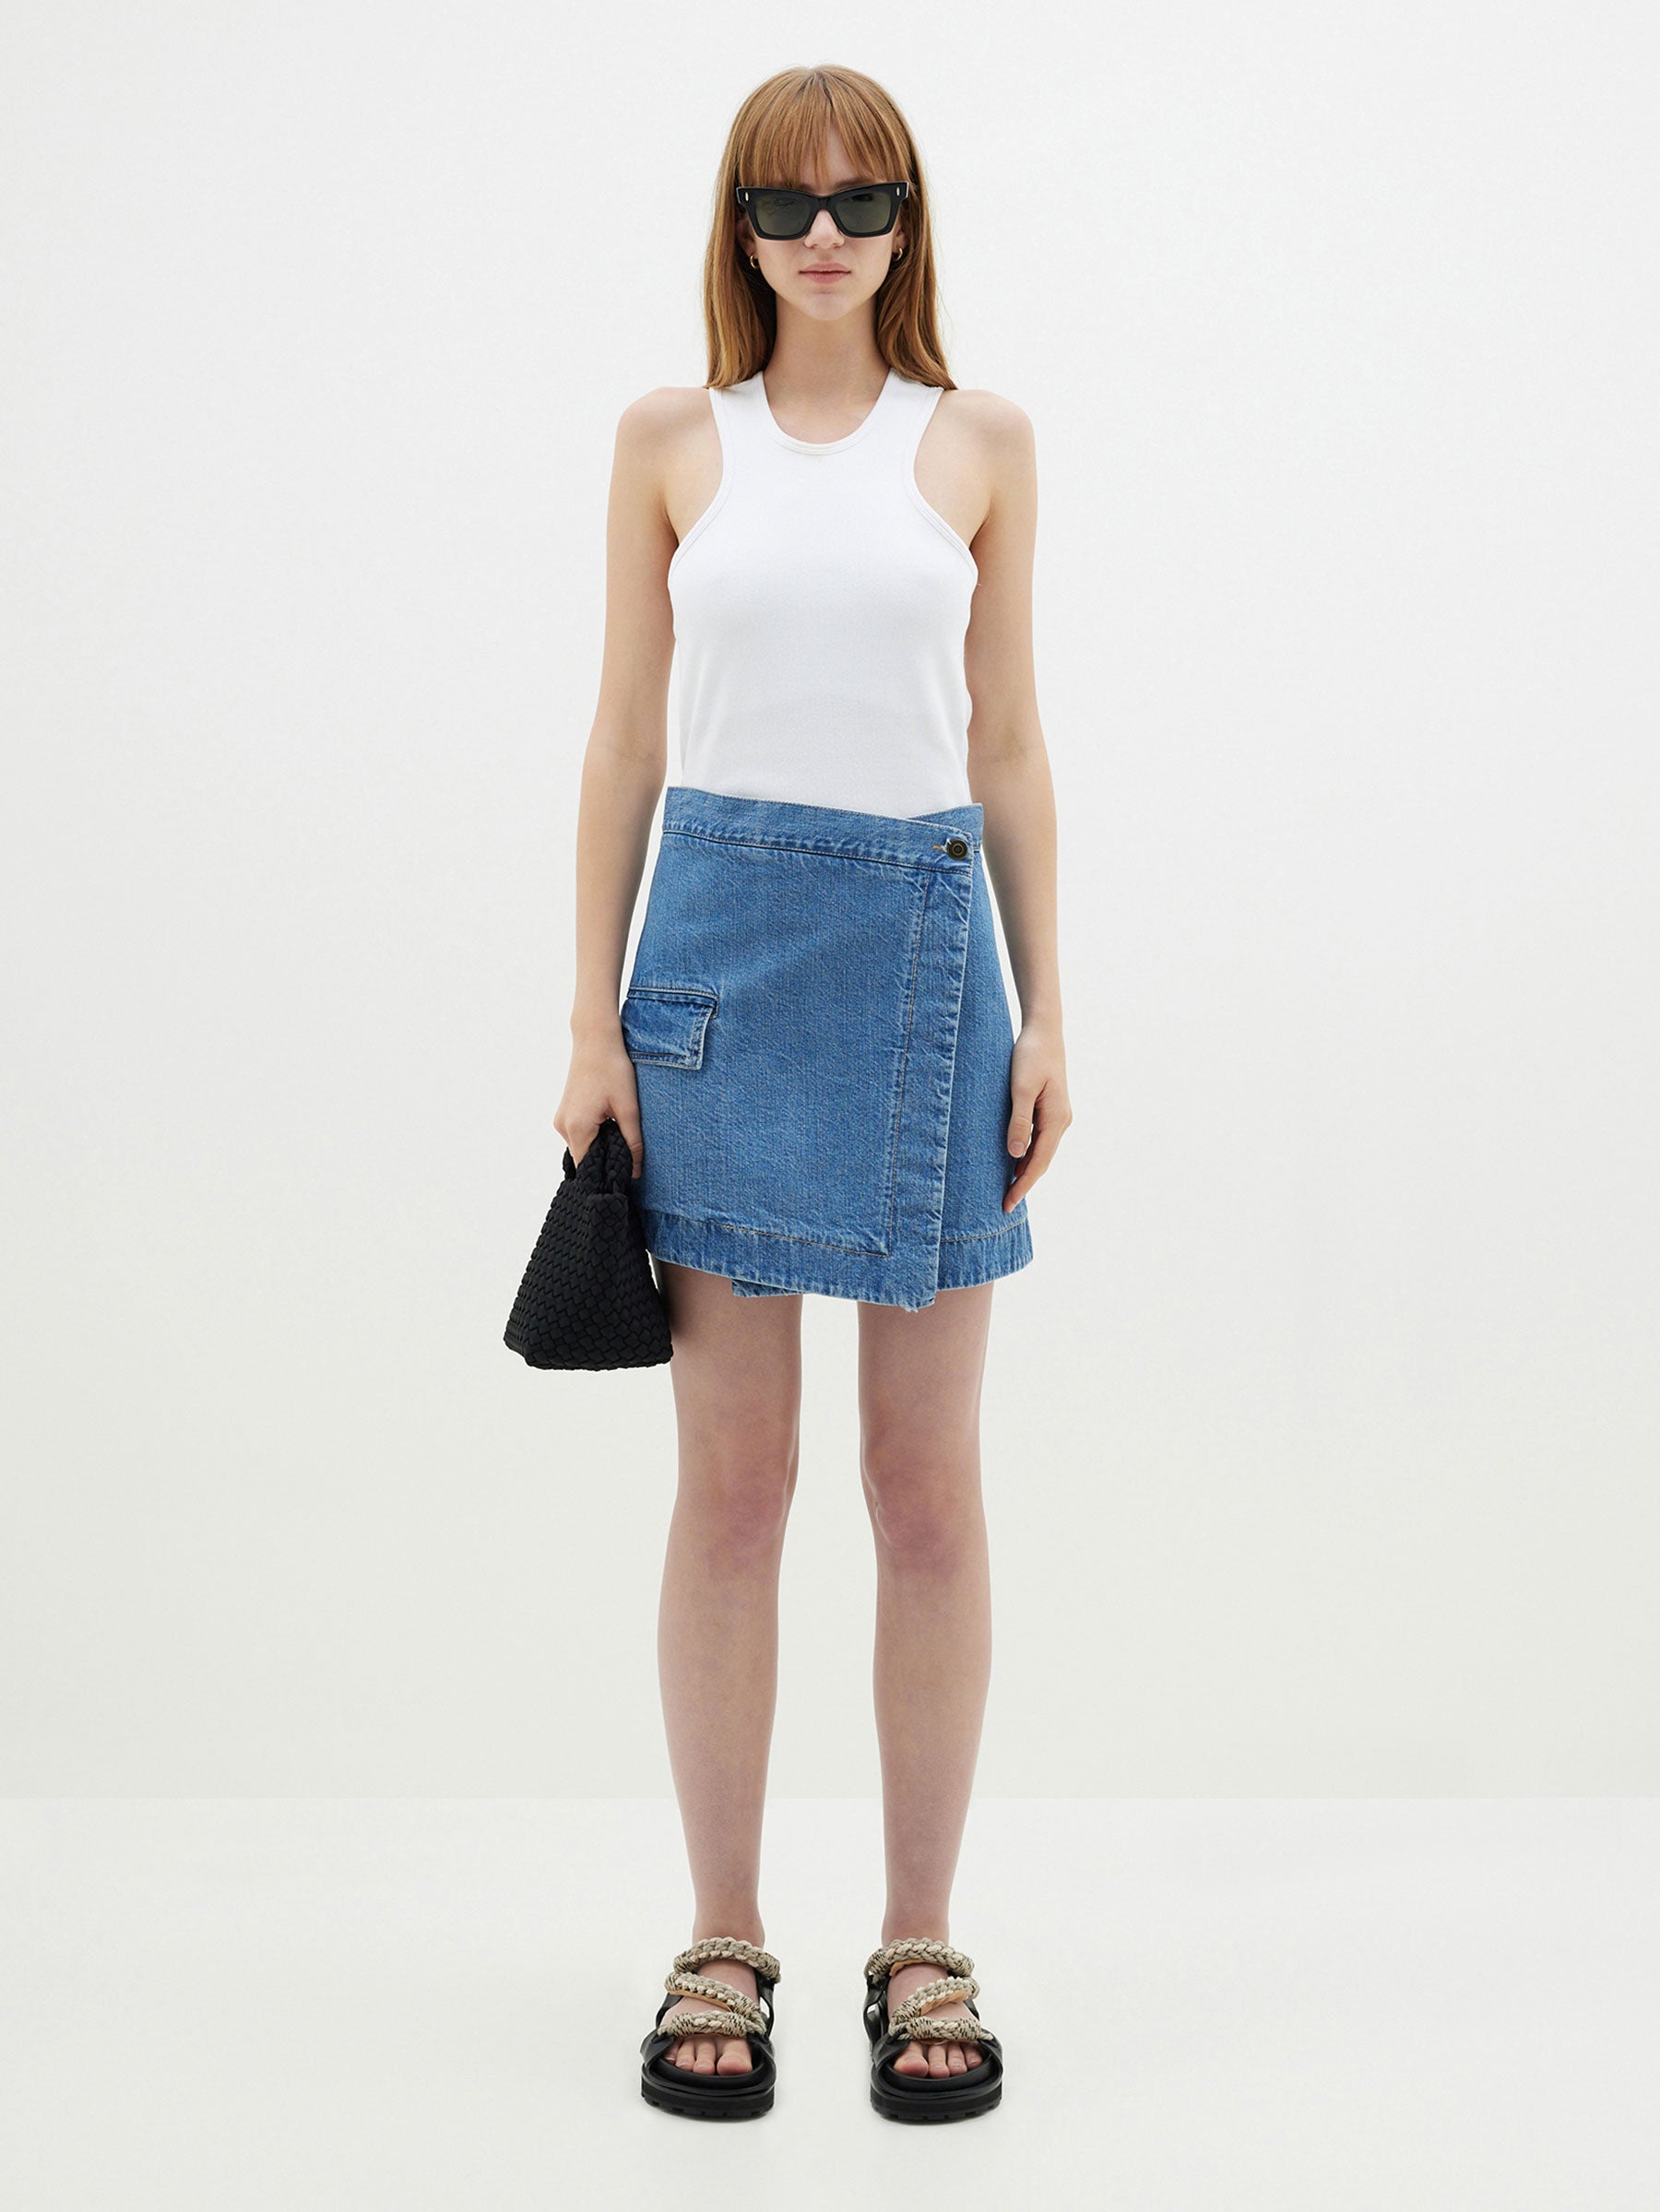 Denim Skort for Women High Waisted Wrap Front Asymmetrical Summer Jean  Denim Skort Skirt Shorts with Pocket